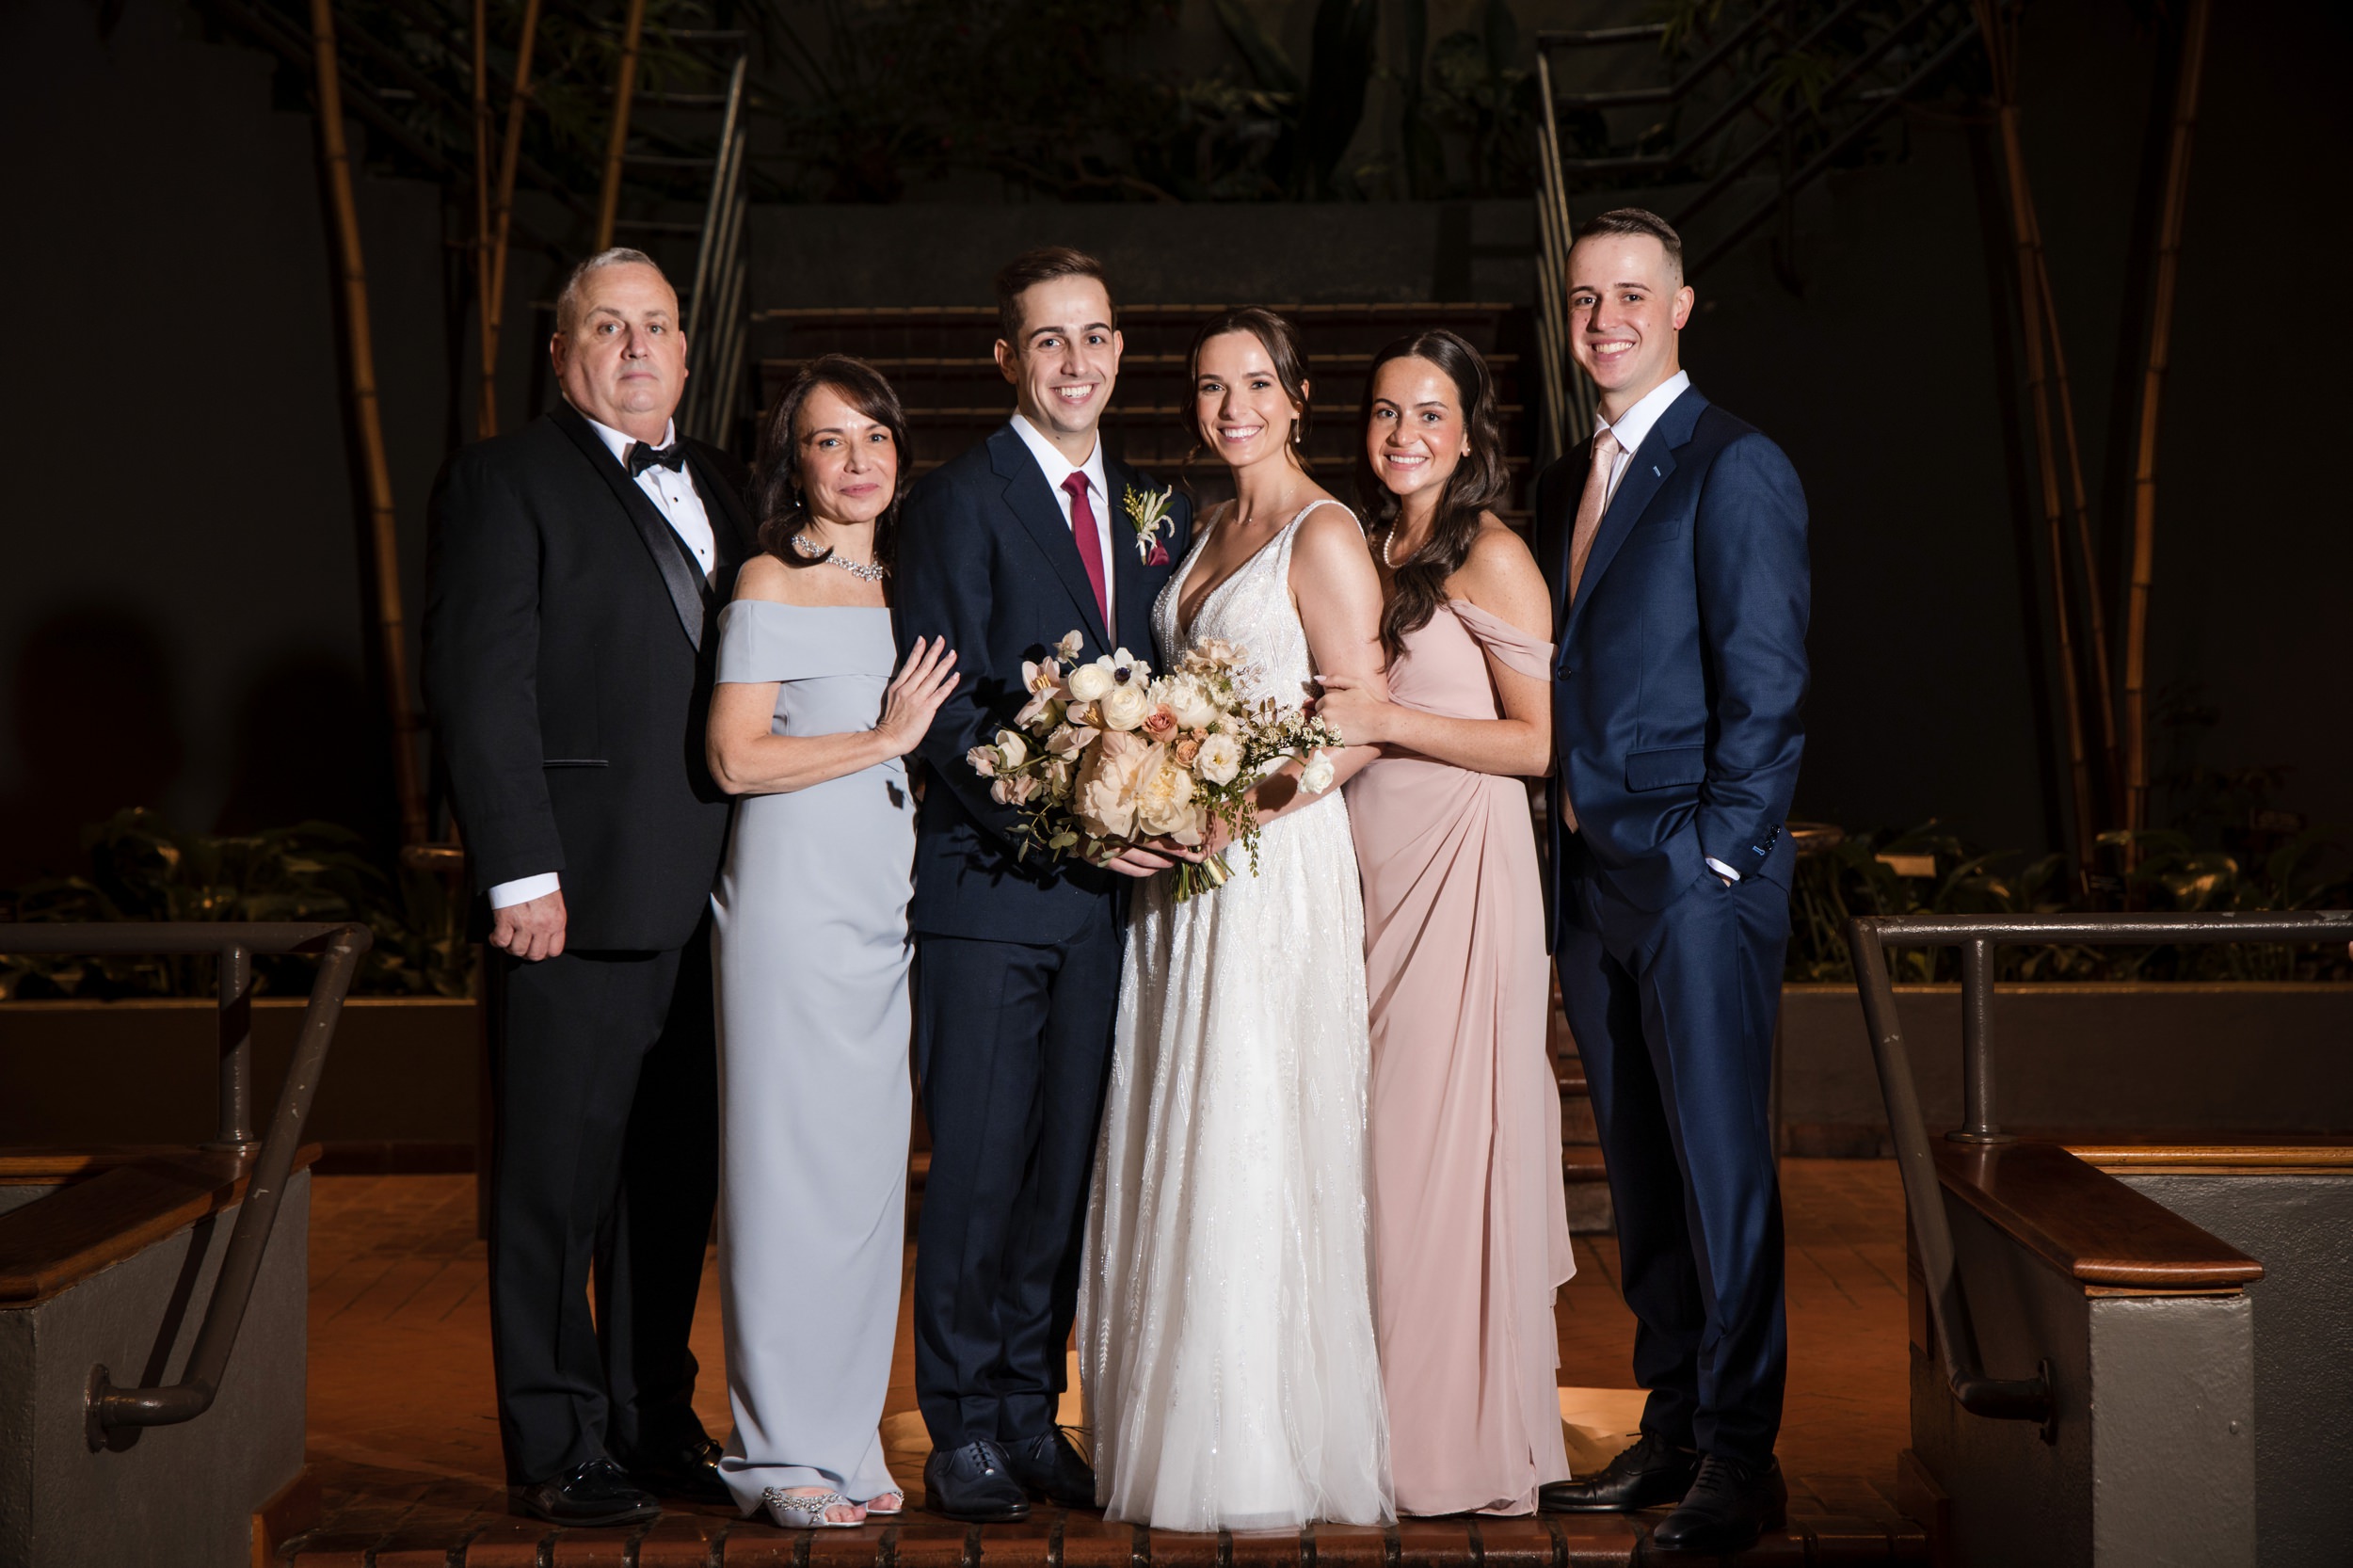 Family photos indoors at a Brooklyn botanic gardens wedding